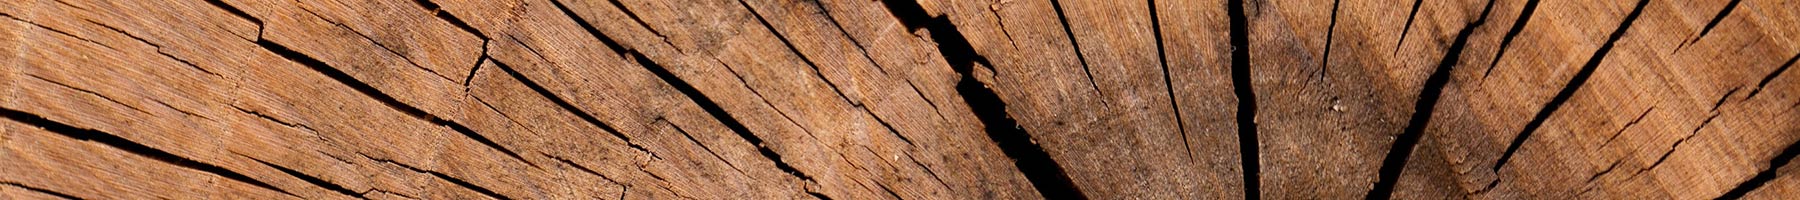 Naturbaustoff Holz für Bodenbeläge